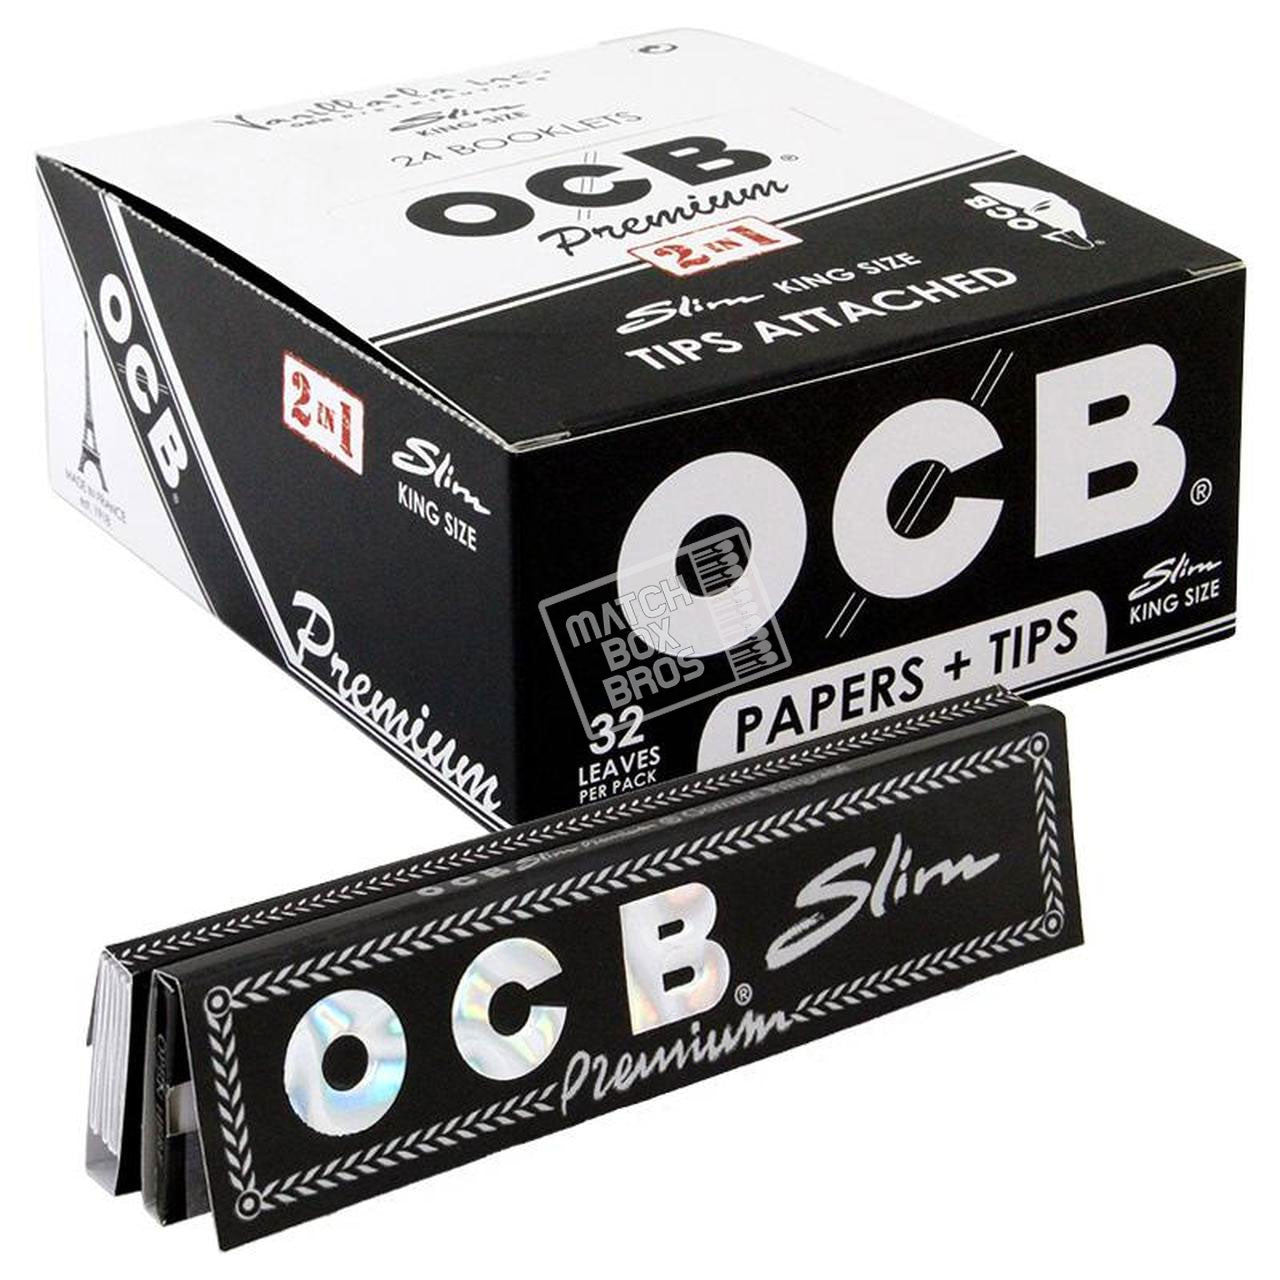 OCB Premium King Slim Paper + Tips